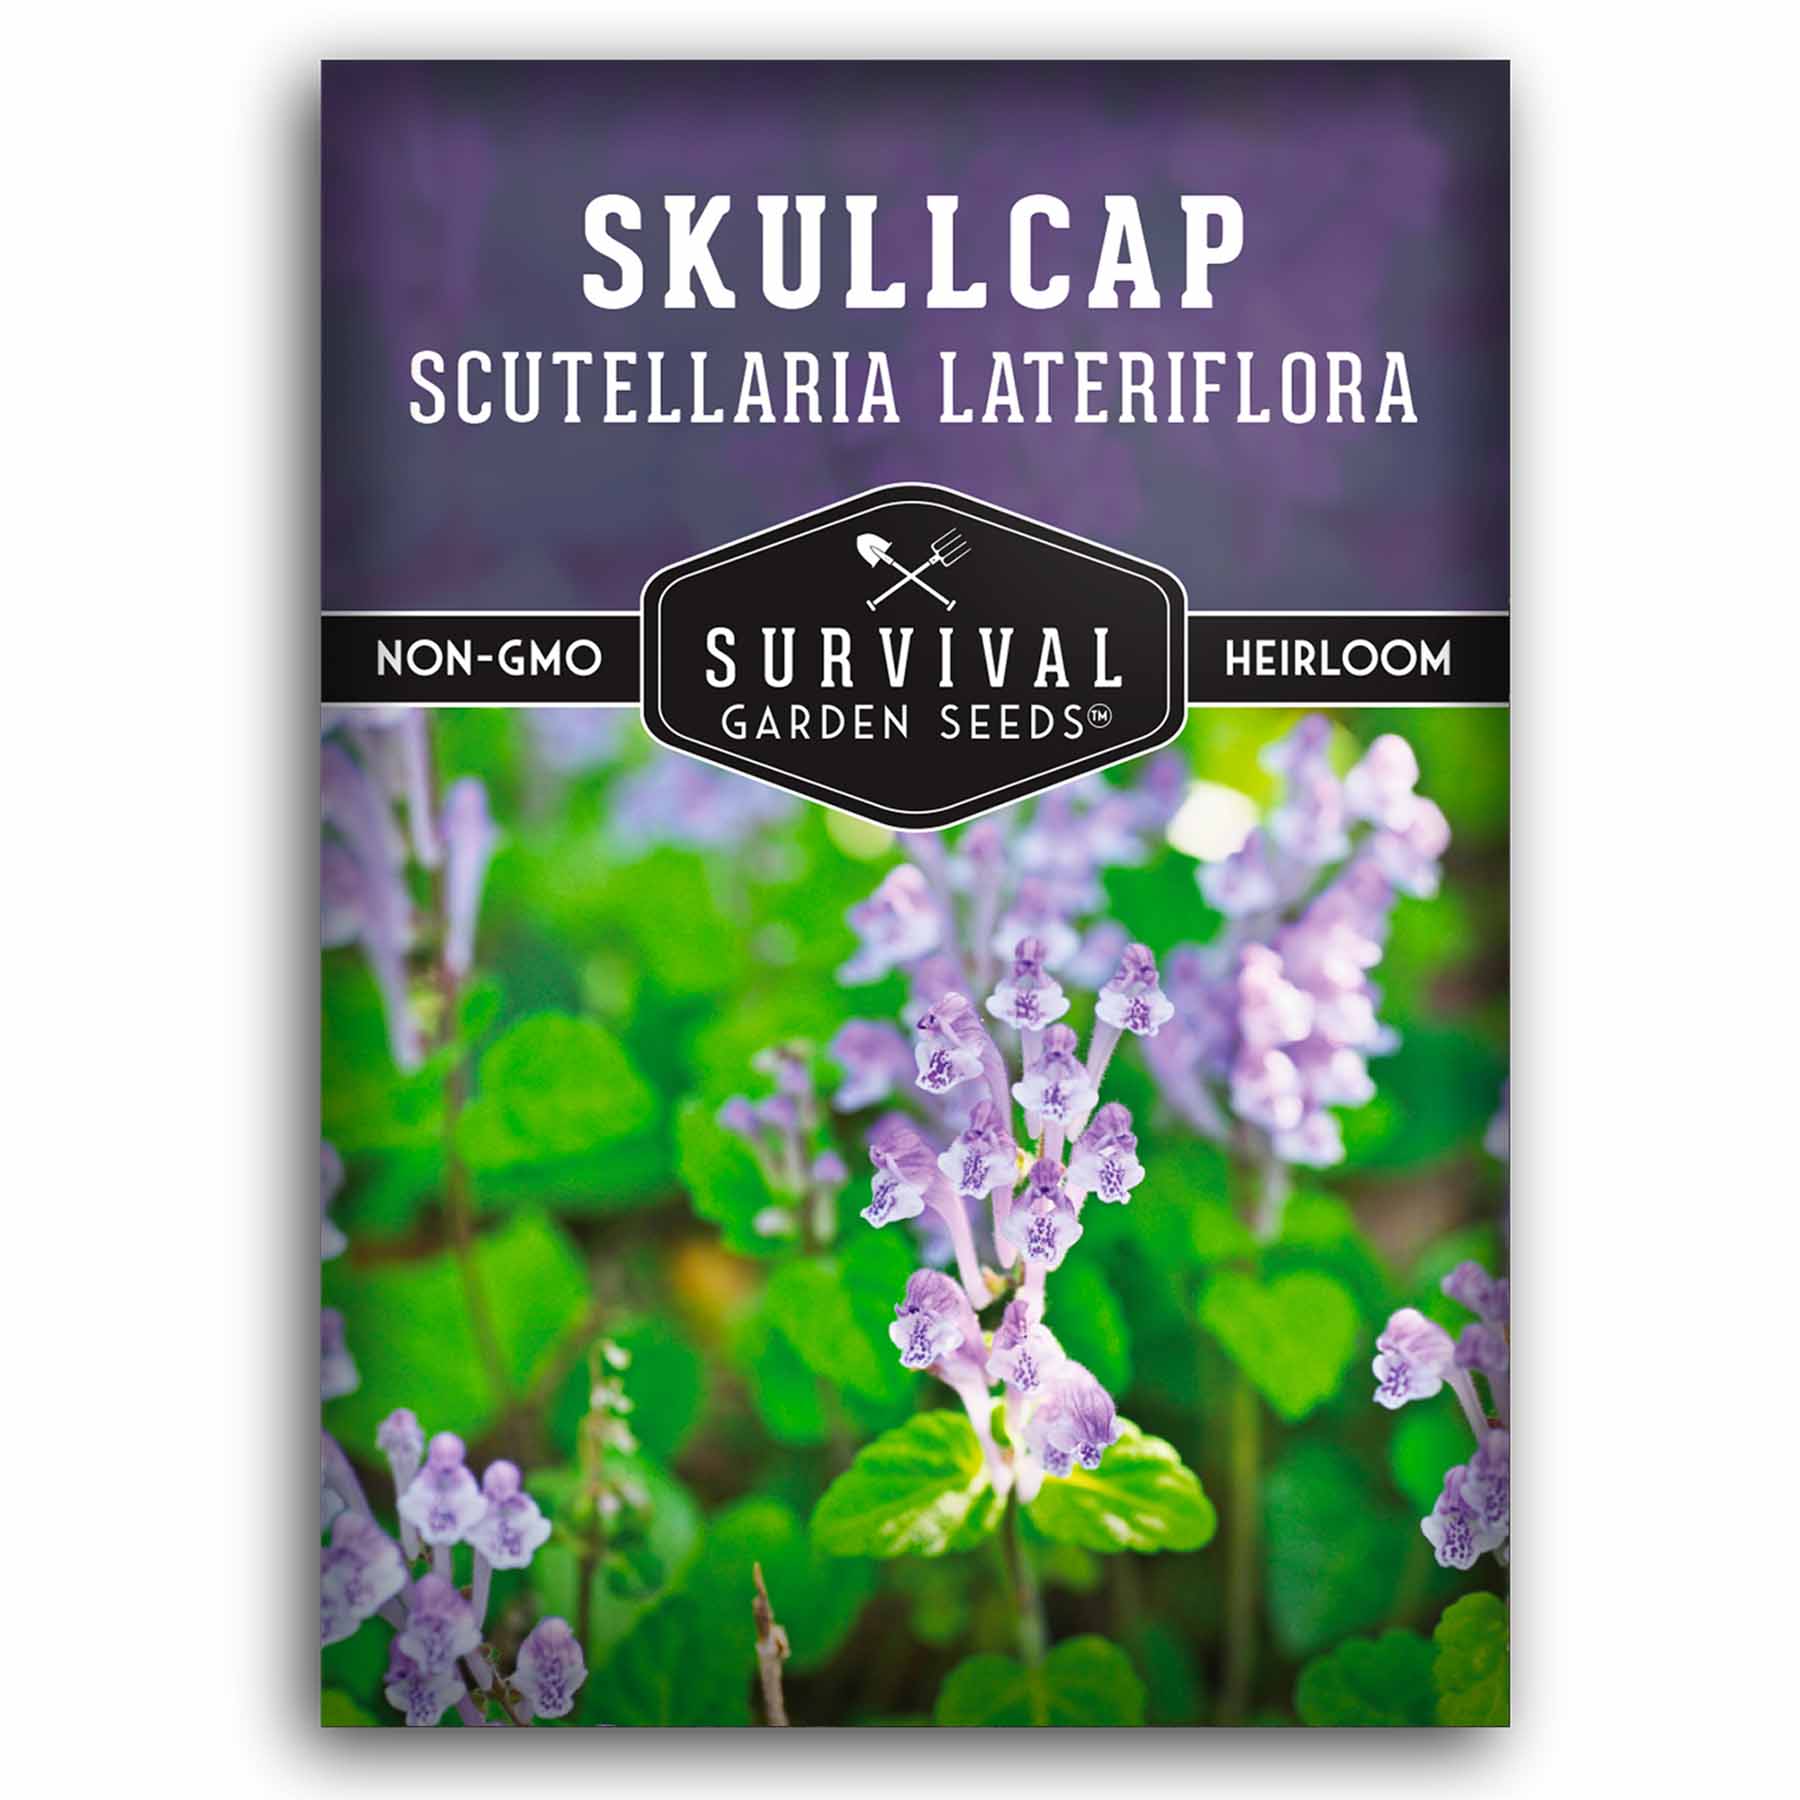 1 packet of Skullcap seeds